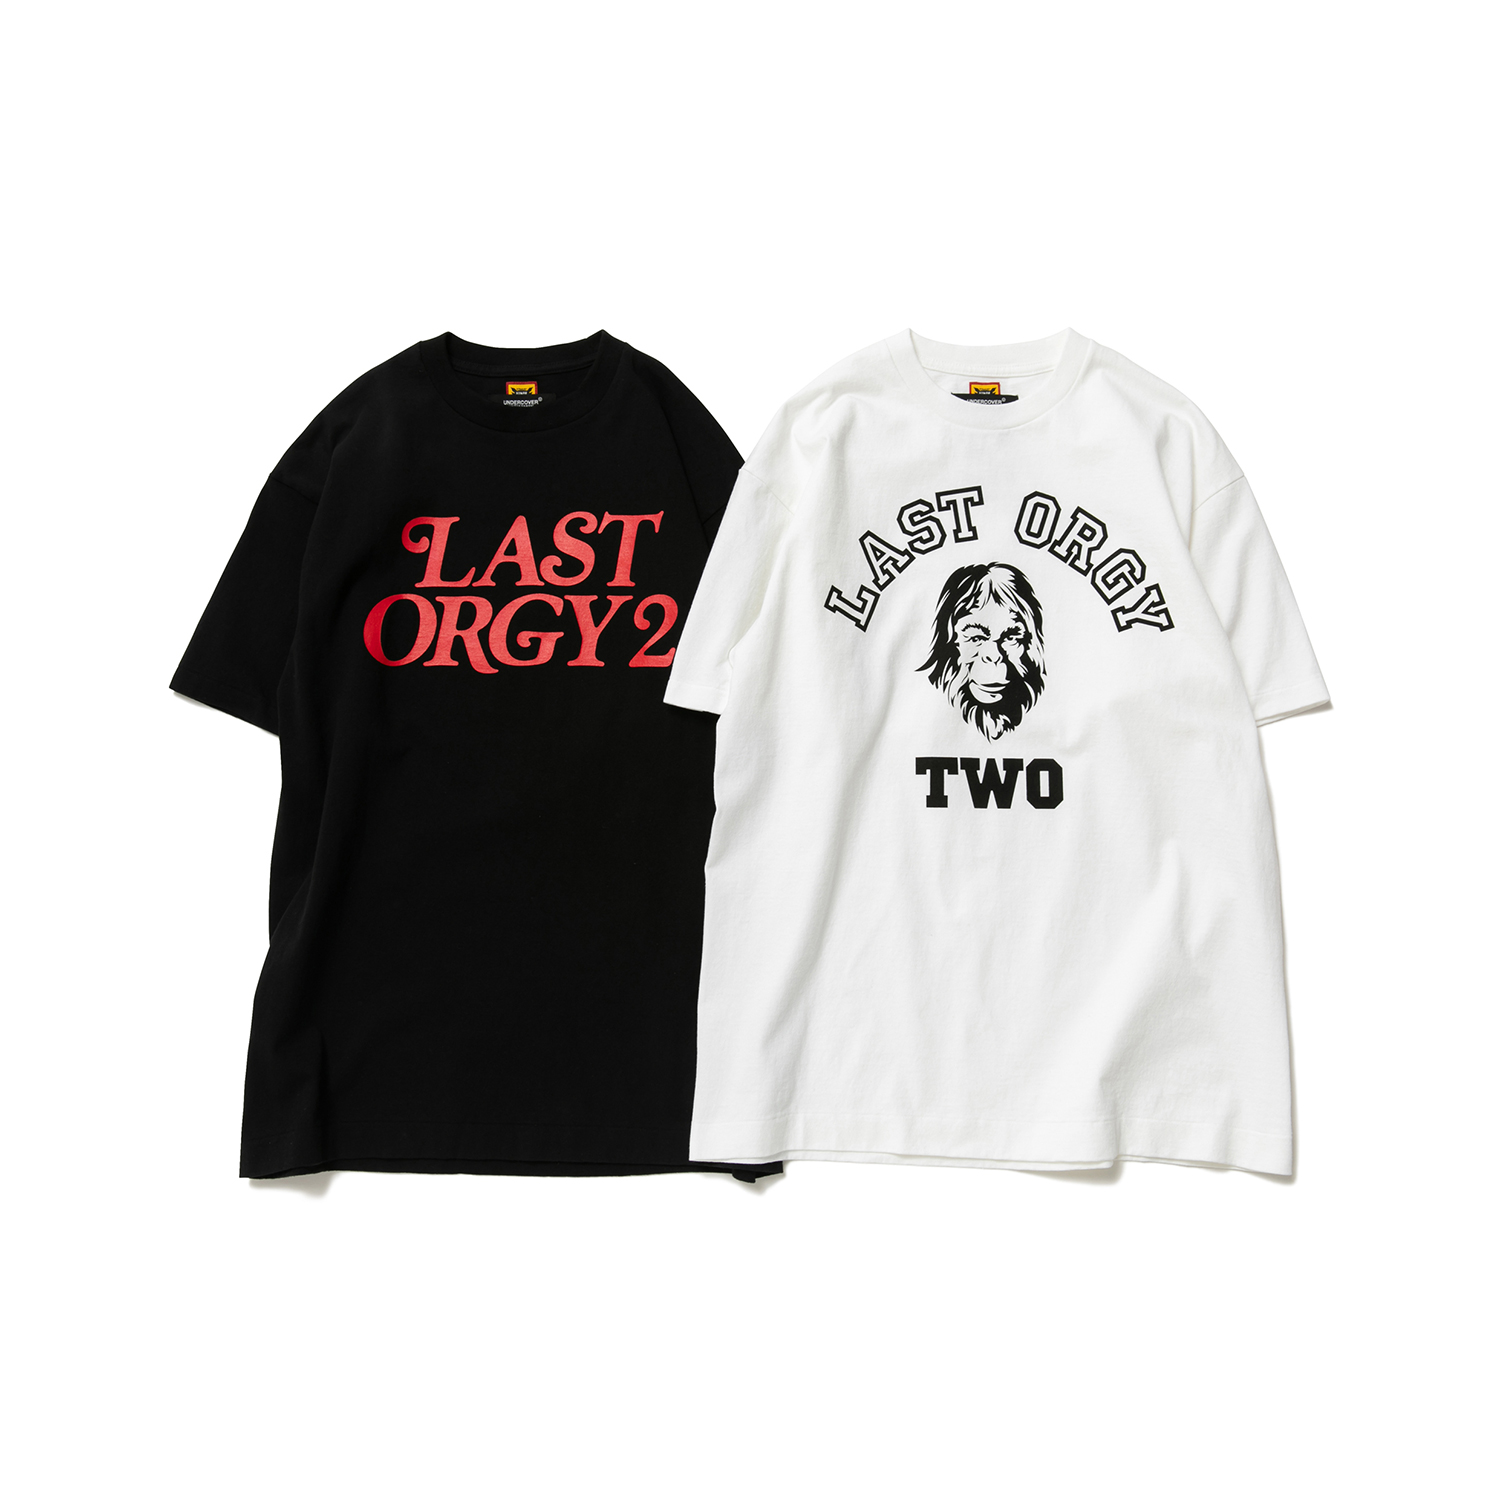 LAST ORGY2 Tシャツ elc.or.jp